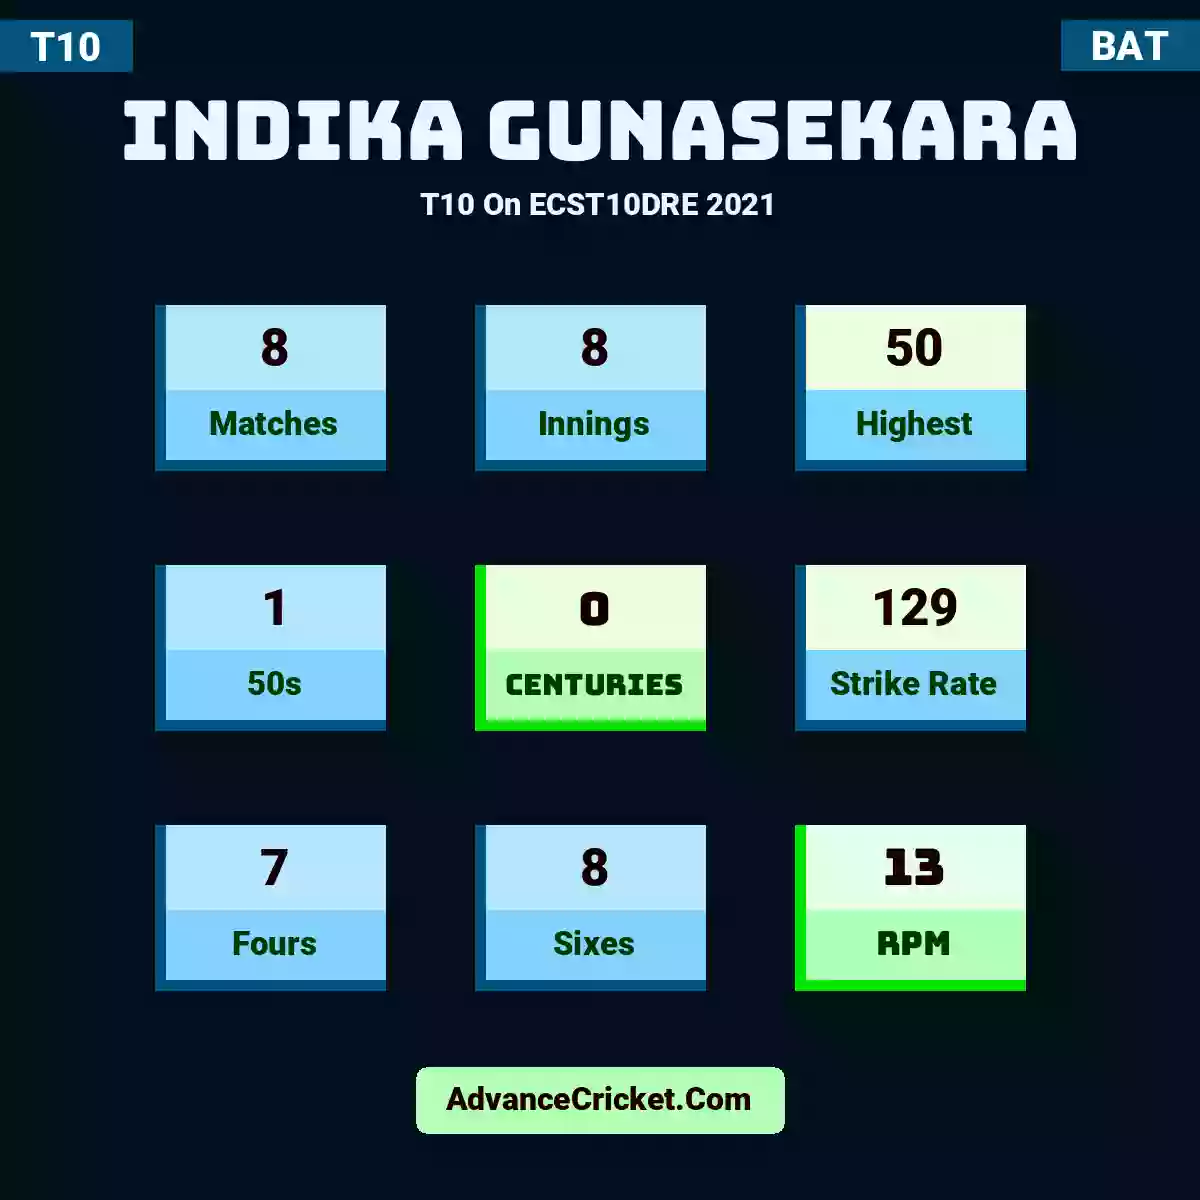 Indika gunasekara T10  On ECST10DRE 2021, Indika gunasekara played 8 matches, scored 50 runs as highest, 1 half-centuries, and 0 centuries, with a strike rate of 129. I.gunasekara hit 7 fours and 8 sixes, with an RPM of 13.